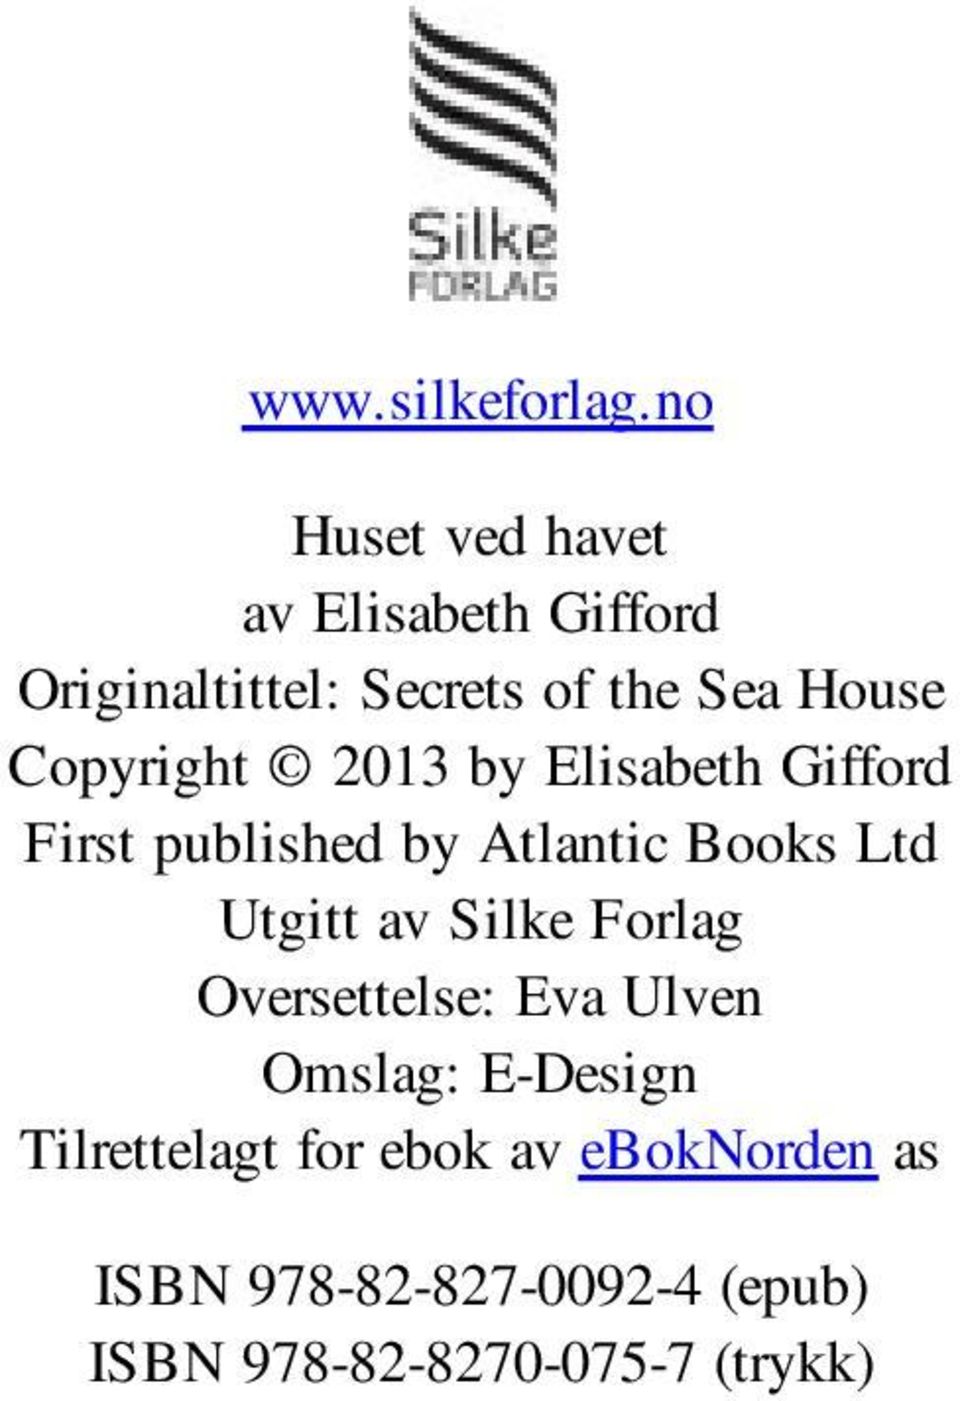 Copyright 2013 by Elisabeth Gifford First published by Atlantic Books Ltd Utgitt av